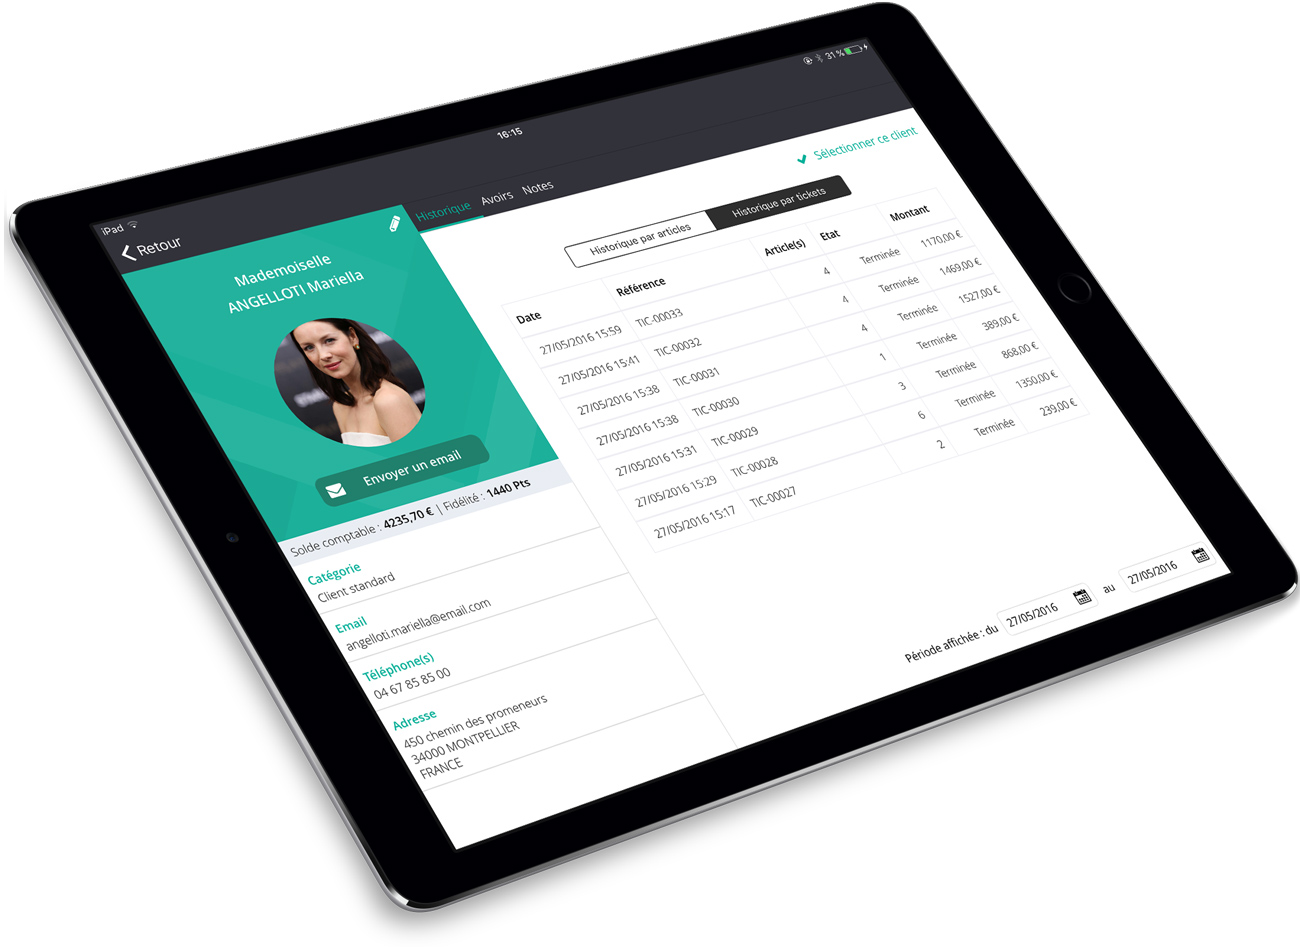 RoverCash software allows you to create a customer directory